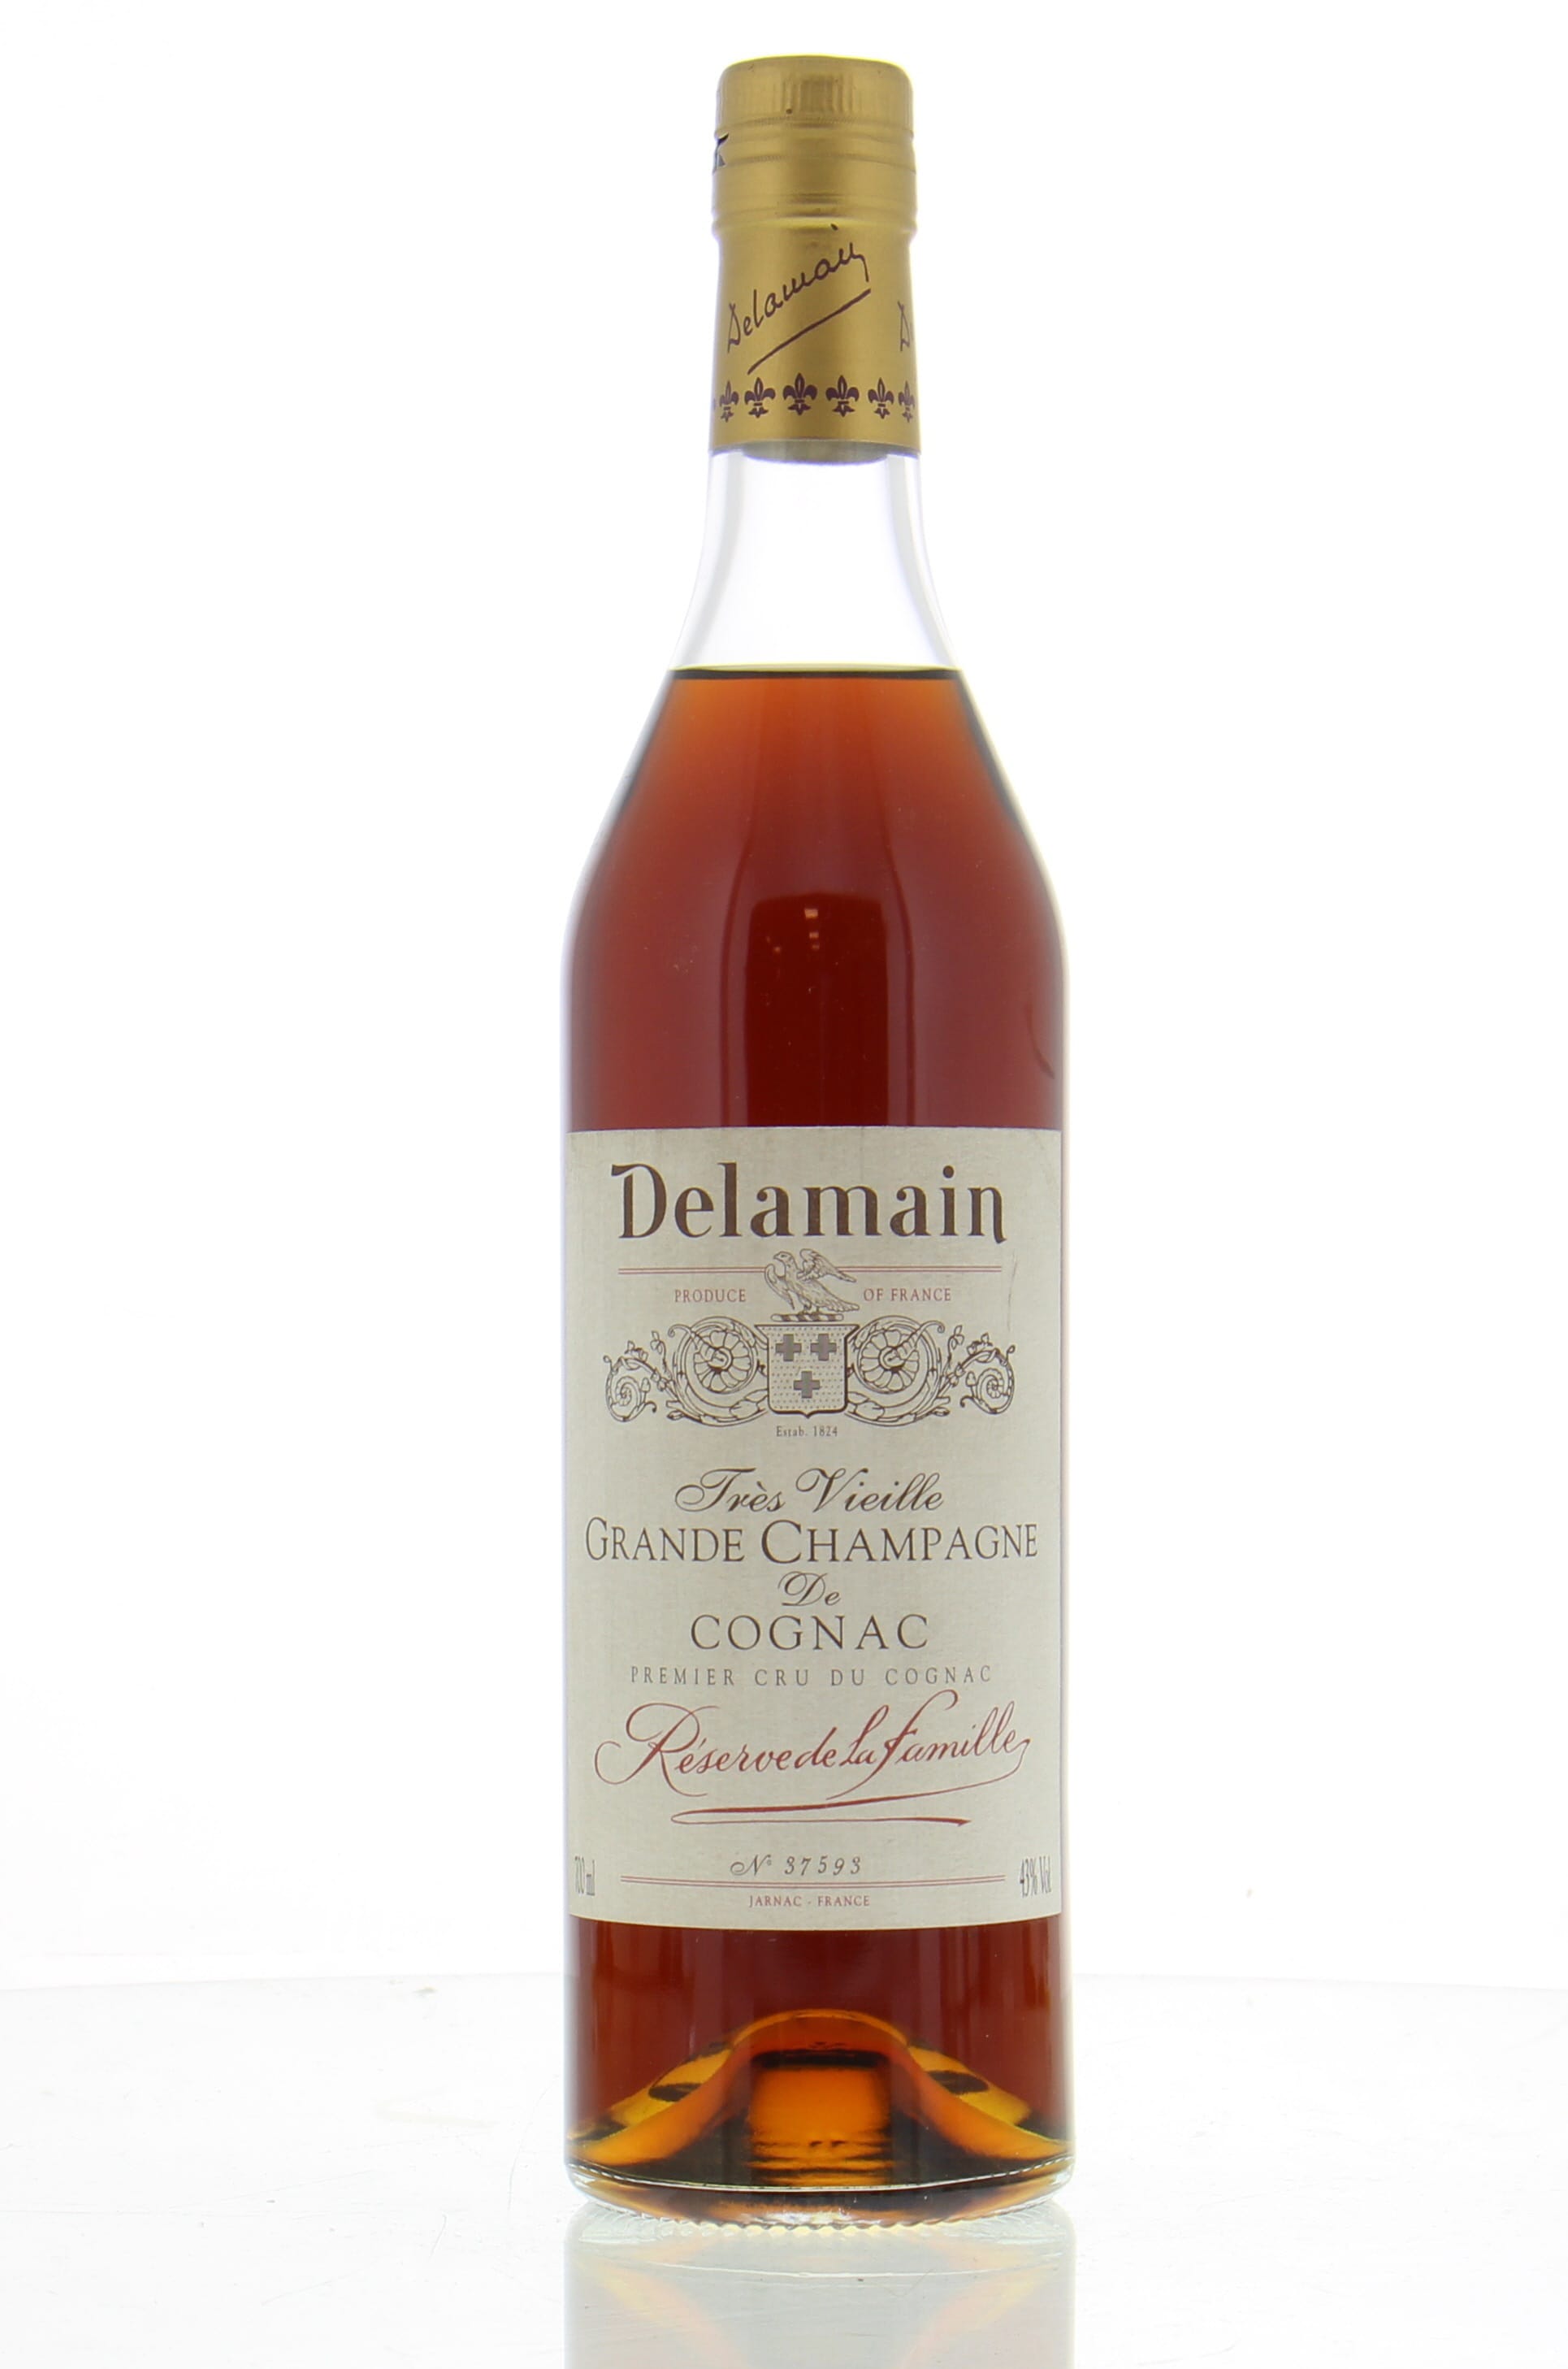 Delamain - Tres Vieille Grande Champagne Reserve la Famille 43% (Old Label) NV Perfect